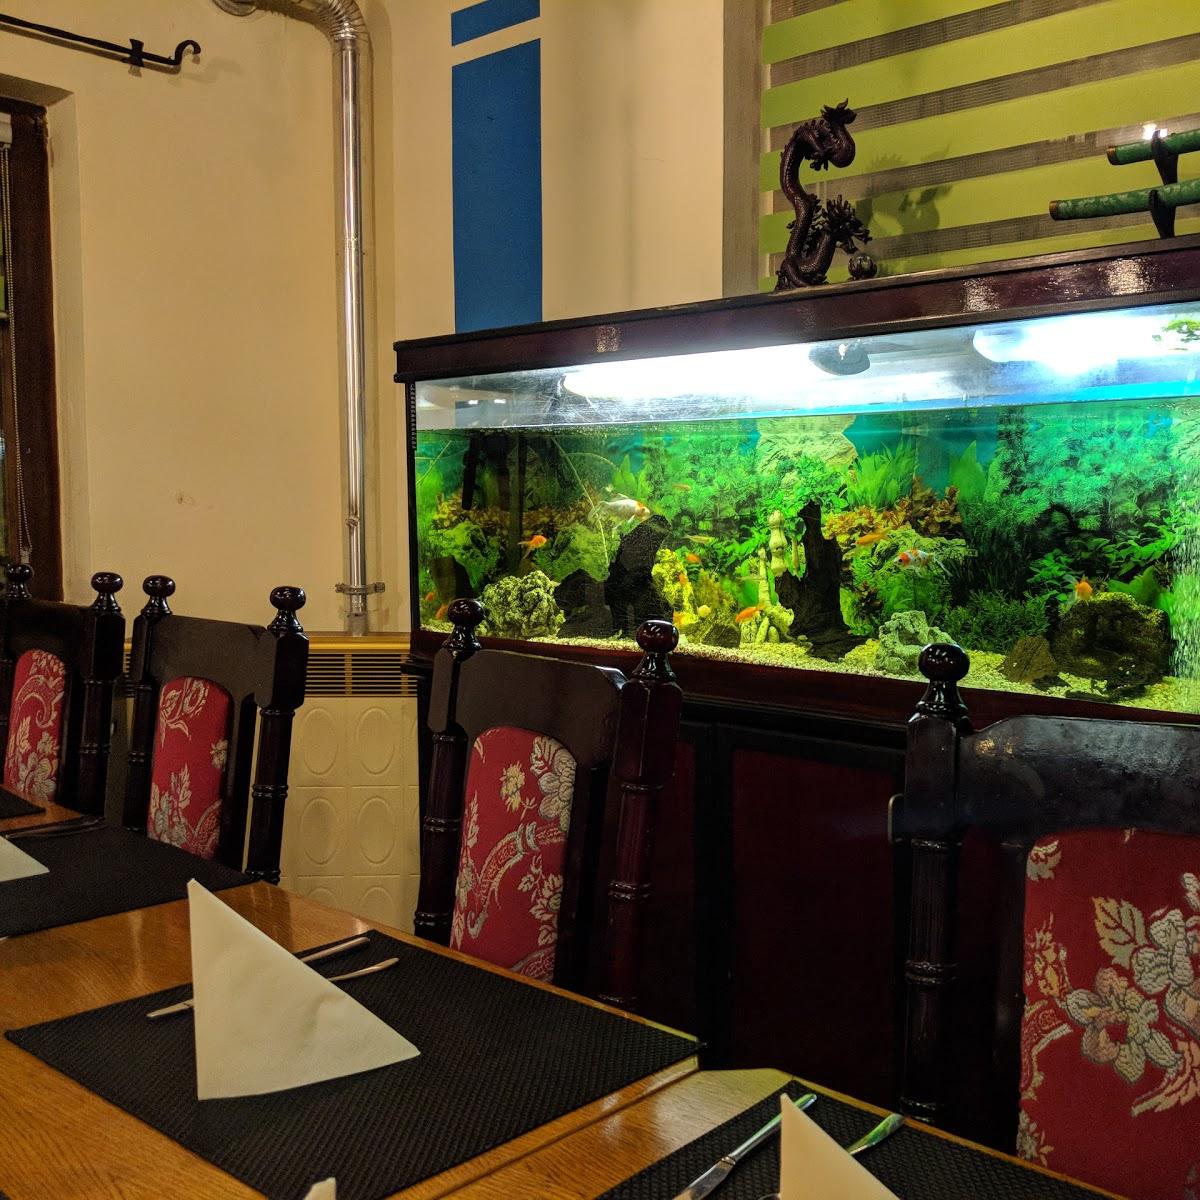 Restaurant "Mekong" in  Straubing